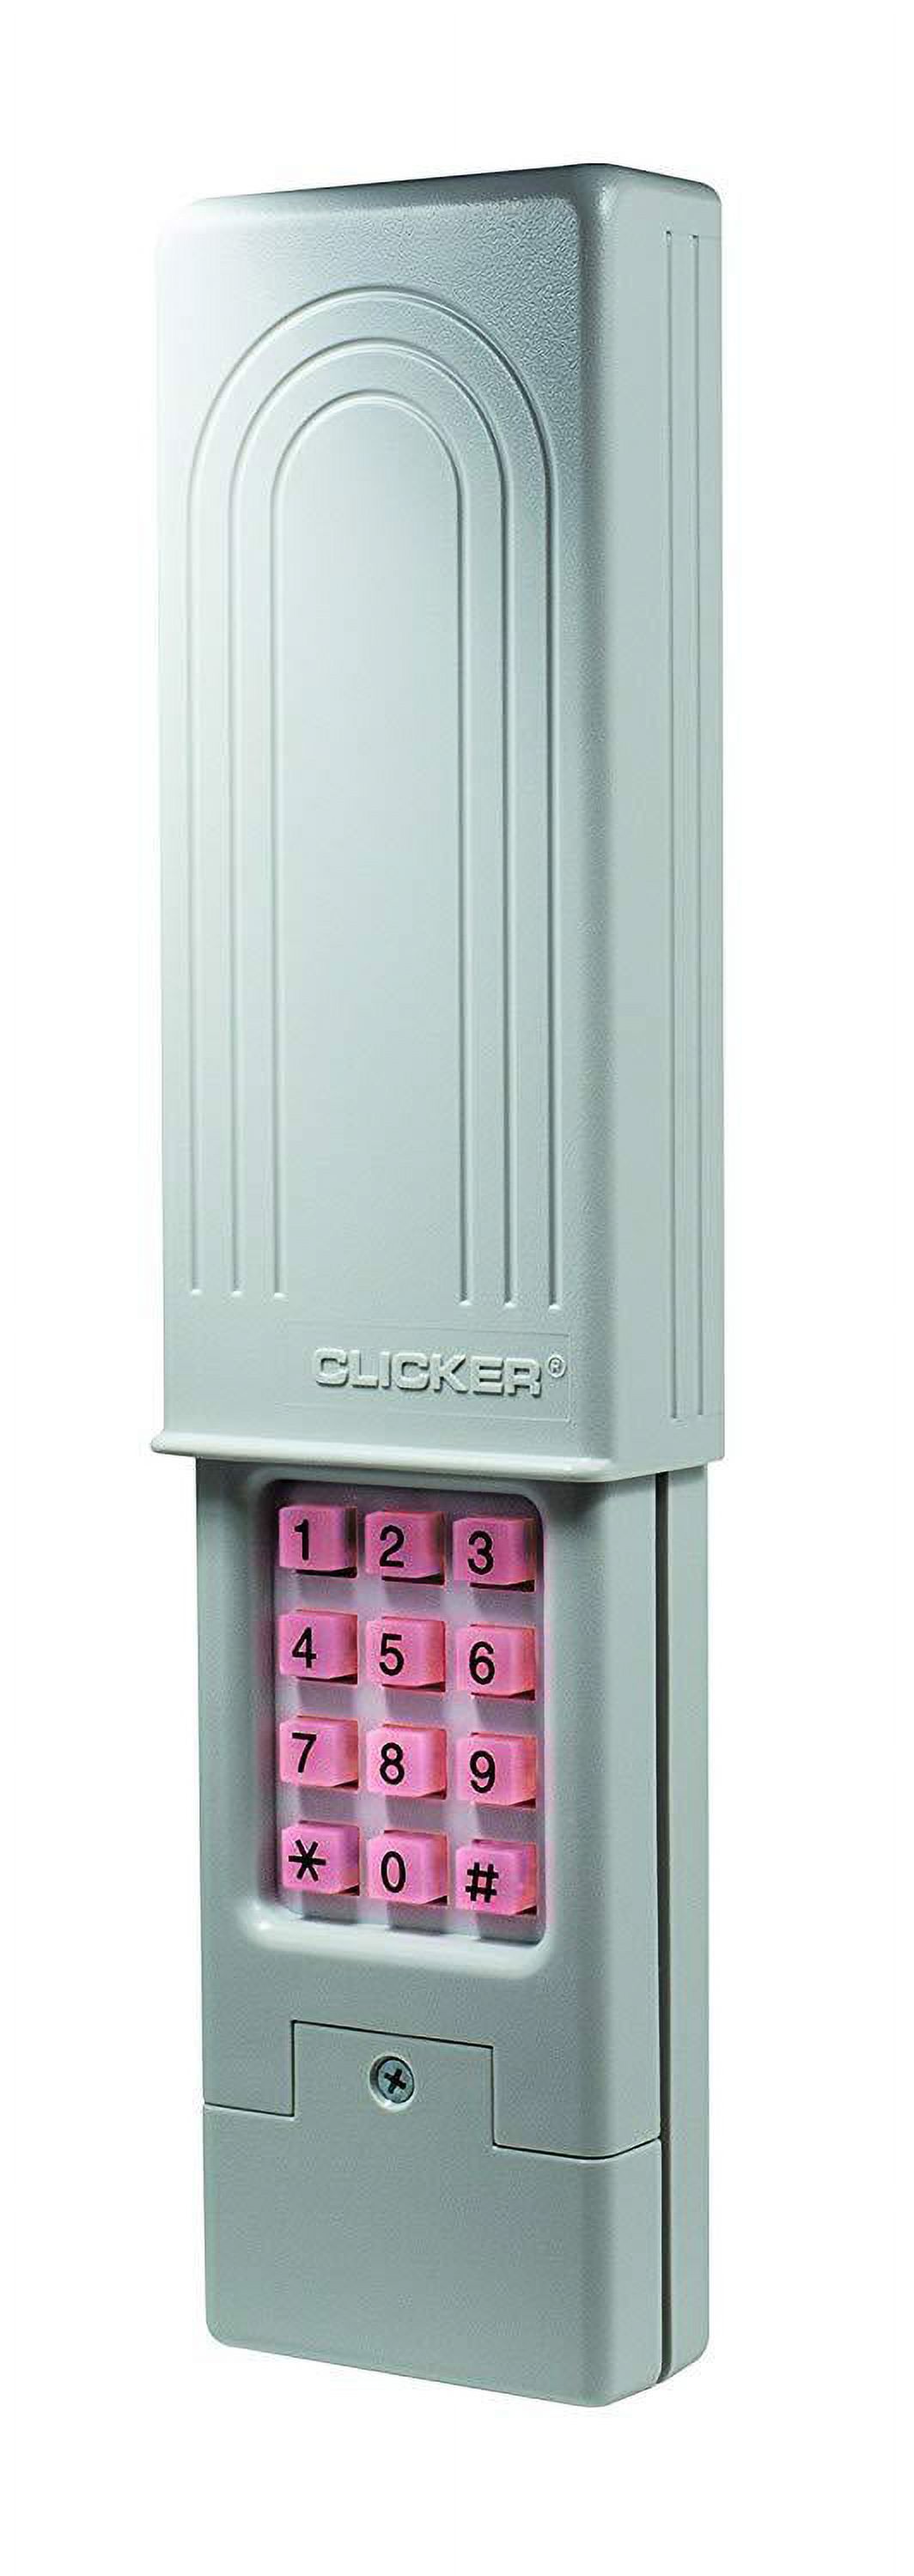 Chamberlain Group Clicker Universal Keyless Entry KLIK2U-P2, Works with  Chamberlain, LiftMaster, Craftsman, Genie and More, Security +2.0 Compatible  Garage Door Opener Keypad, White